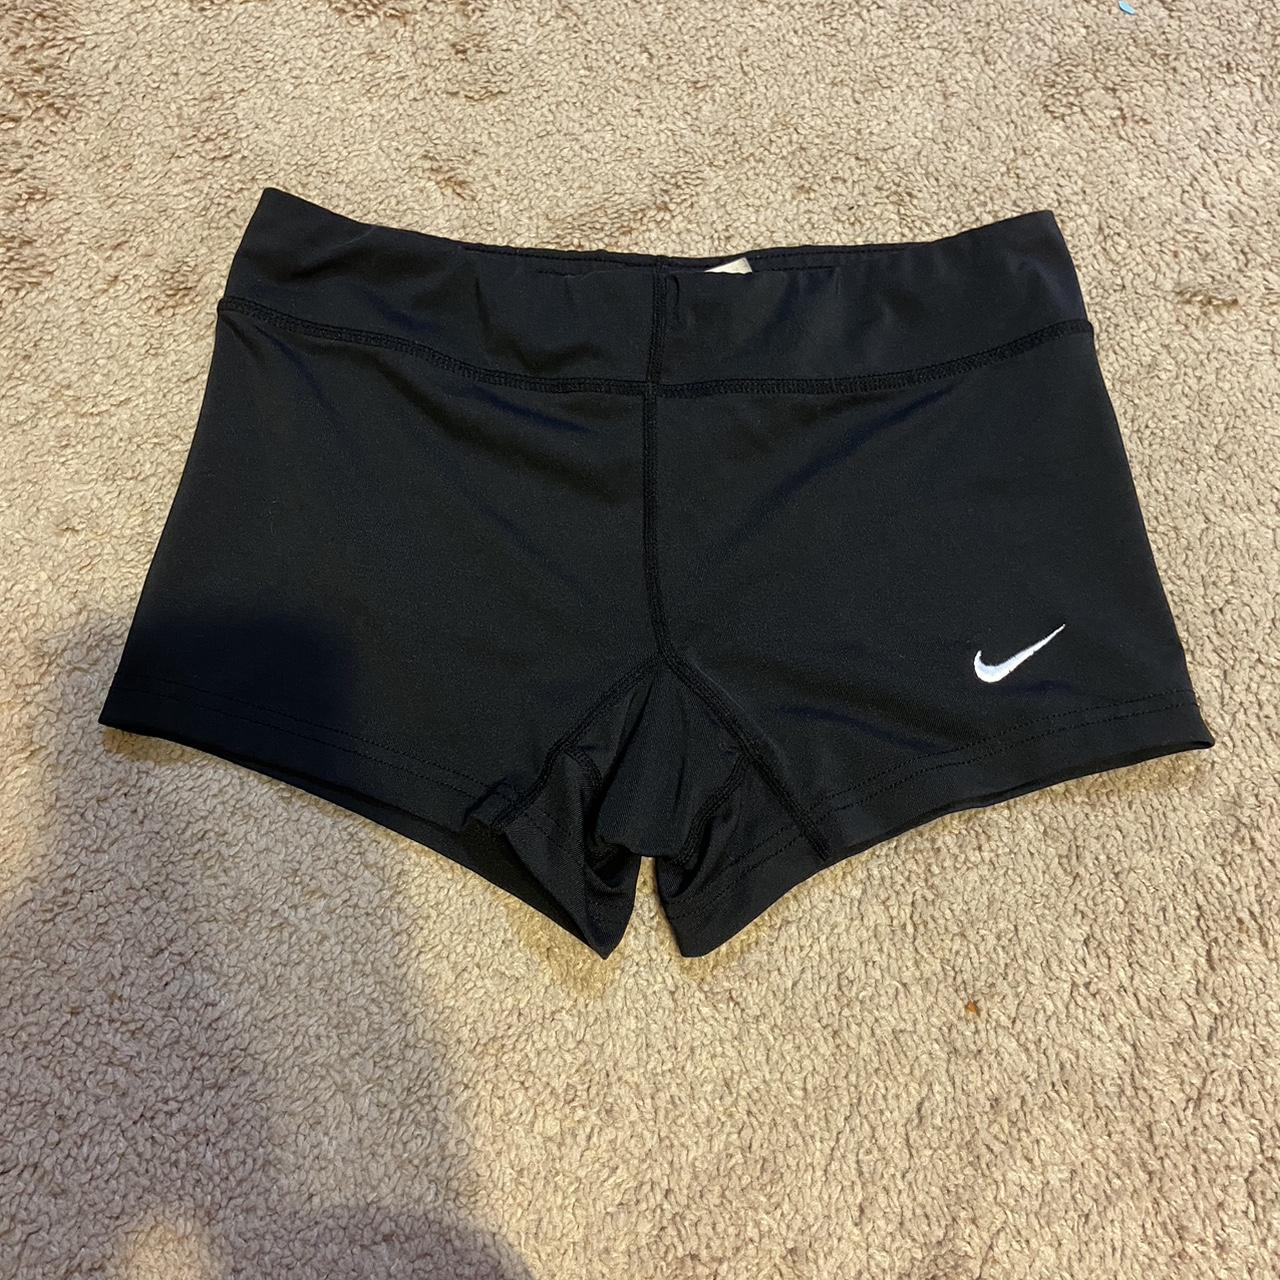 Nike Women's XXS Performance Dri-Fit Volleyball Shorts Black New Free  Shipping